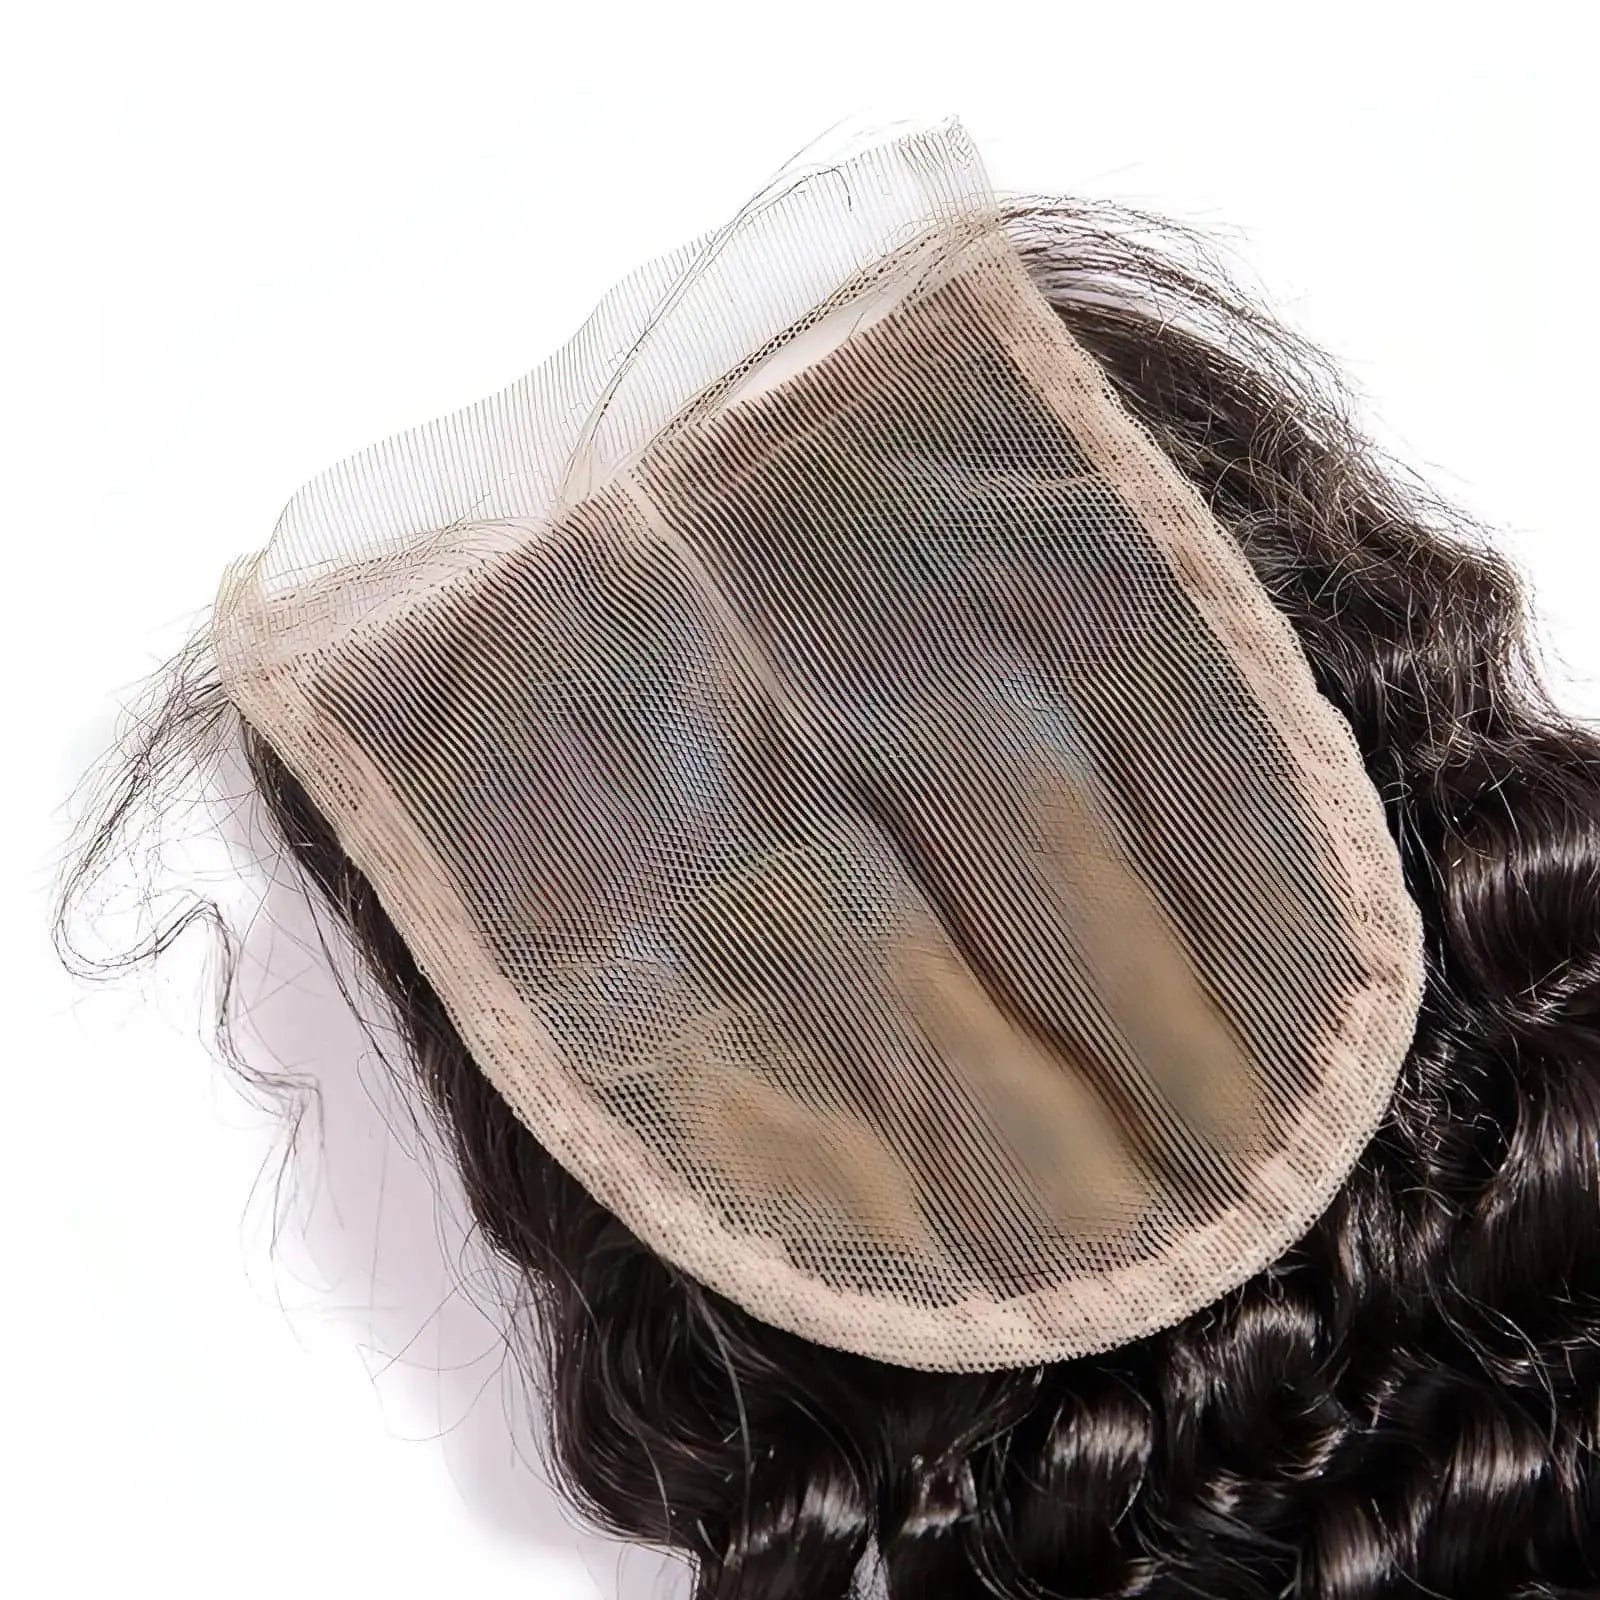 Kinky Curly Lace Closure - HookedOnBundles Virgin Hair